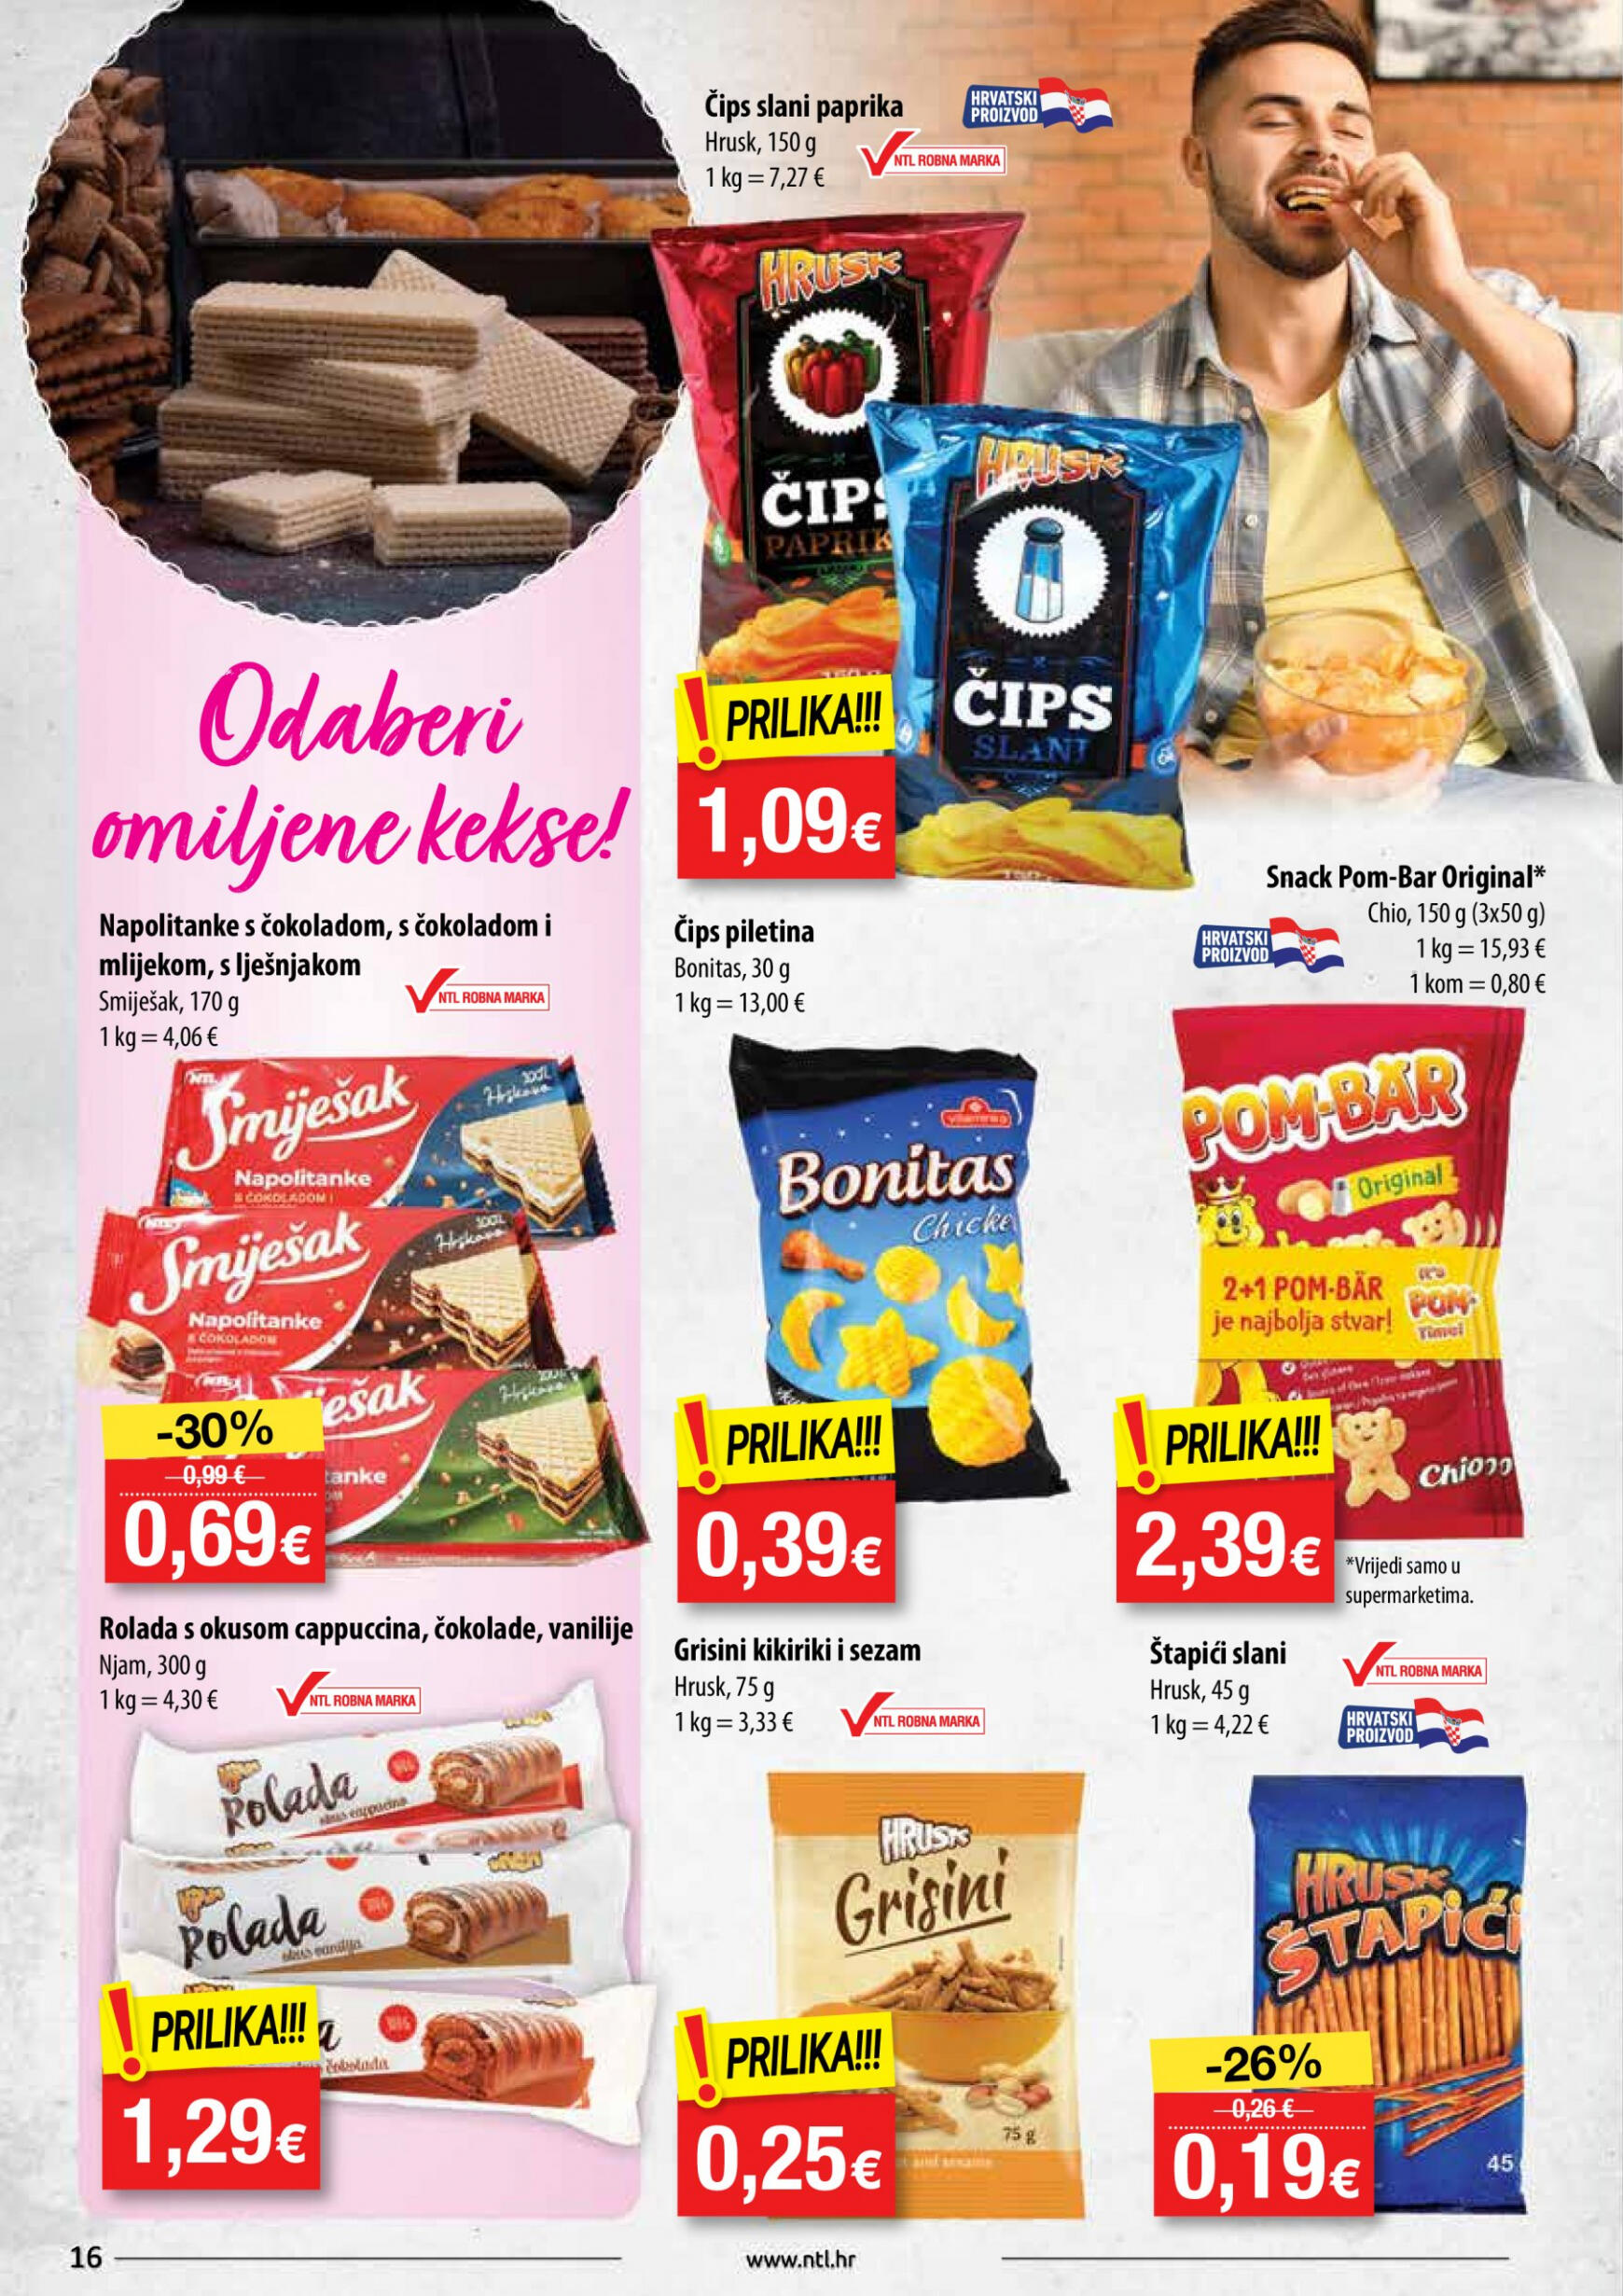 ntl - Novi katalog NTL - Supermarketi Soblinec, Krapina, Duga Resa 10.04. - 16.04. - page: 16